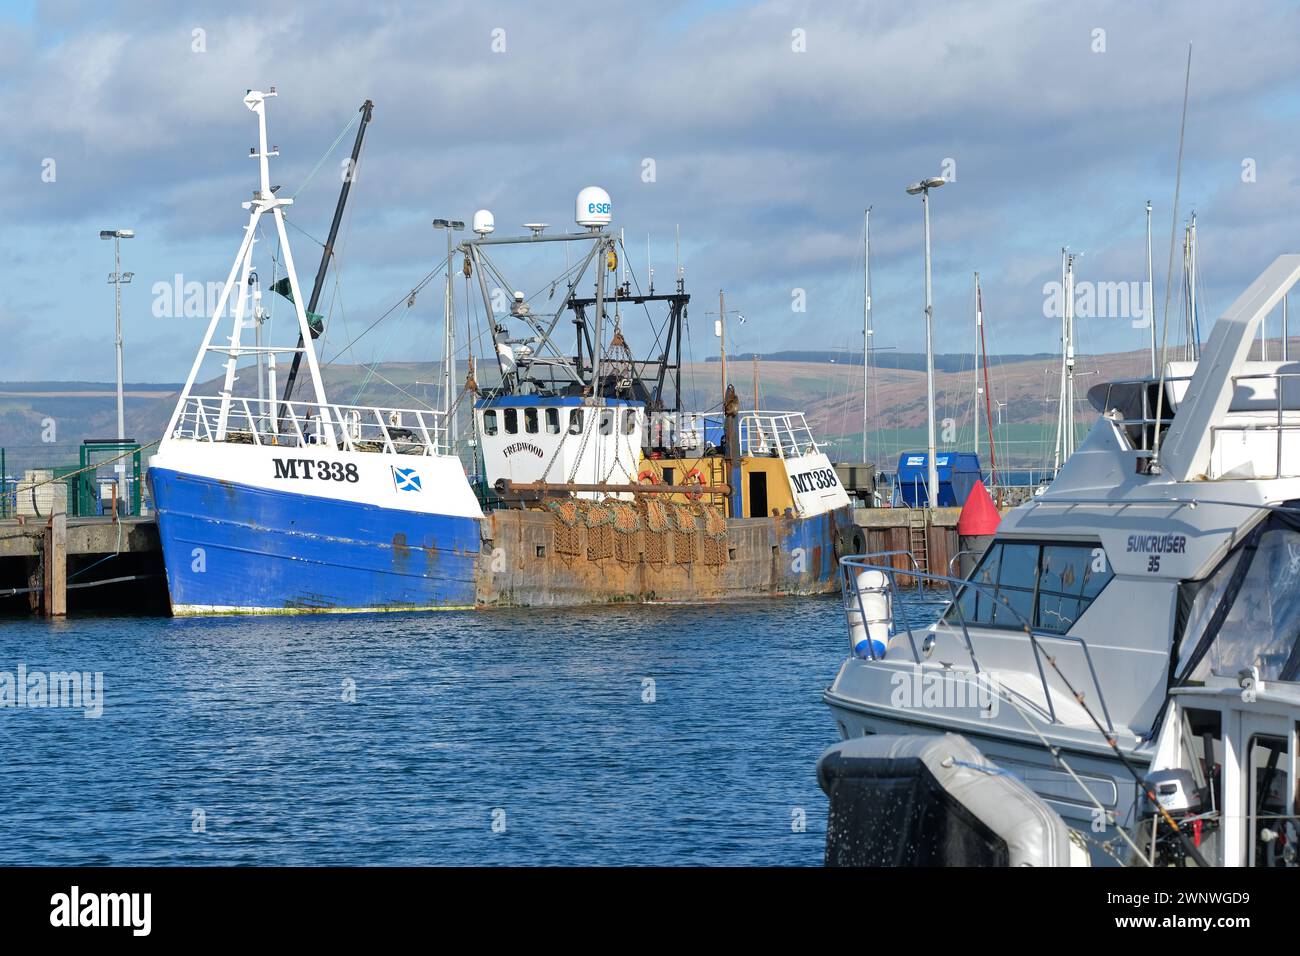 Stranraer Scotland UK - fishing vessel trawler MT338 named Fredwood in the harbour used for shellfish trawling Stock Photo